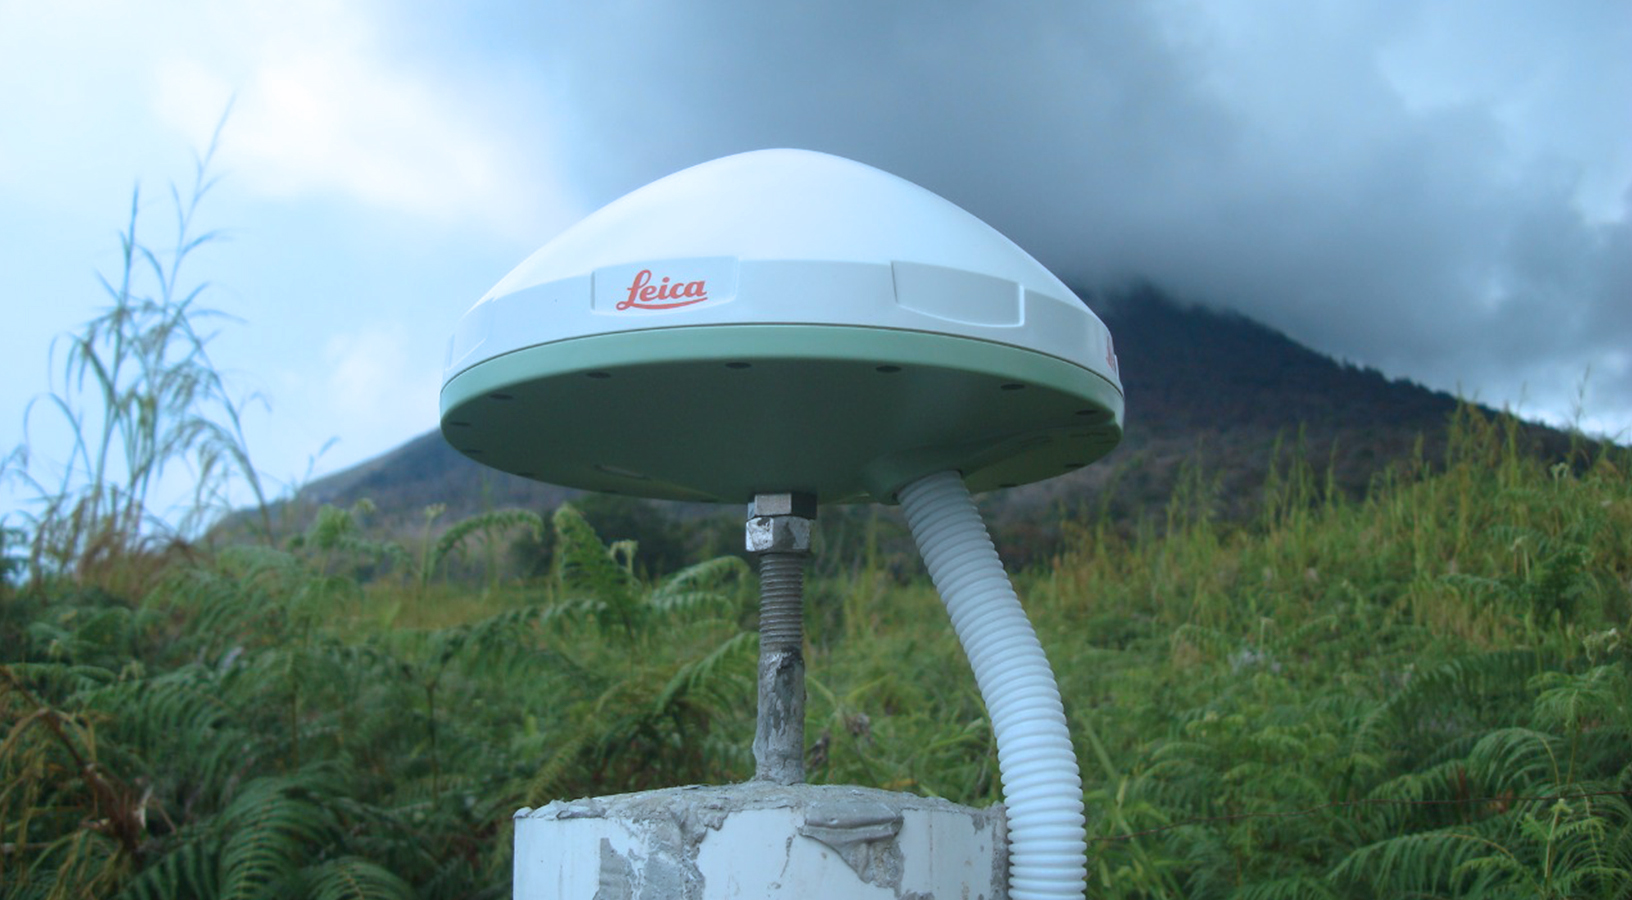 monitoramento ambiental com GNSS